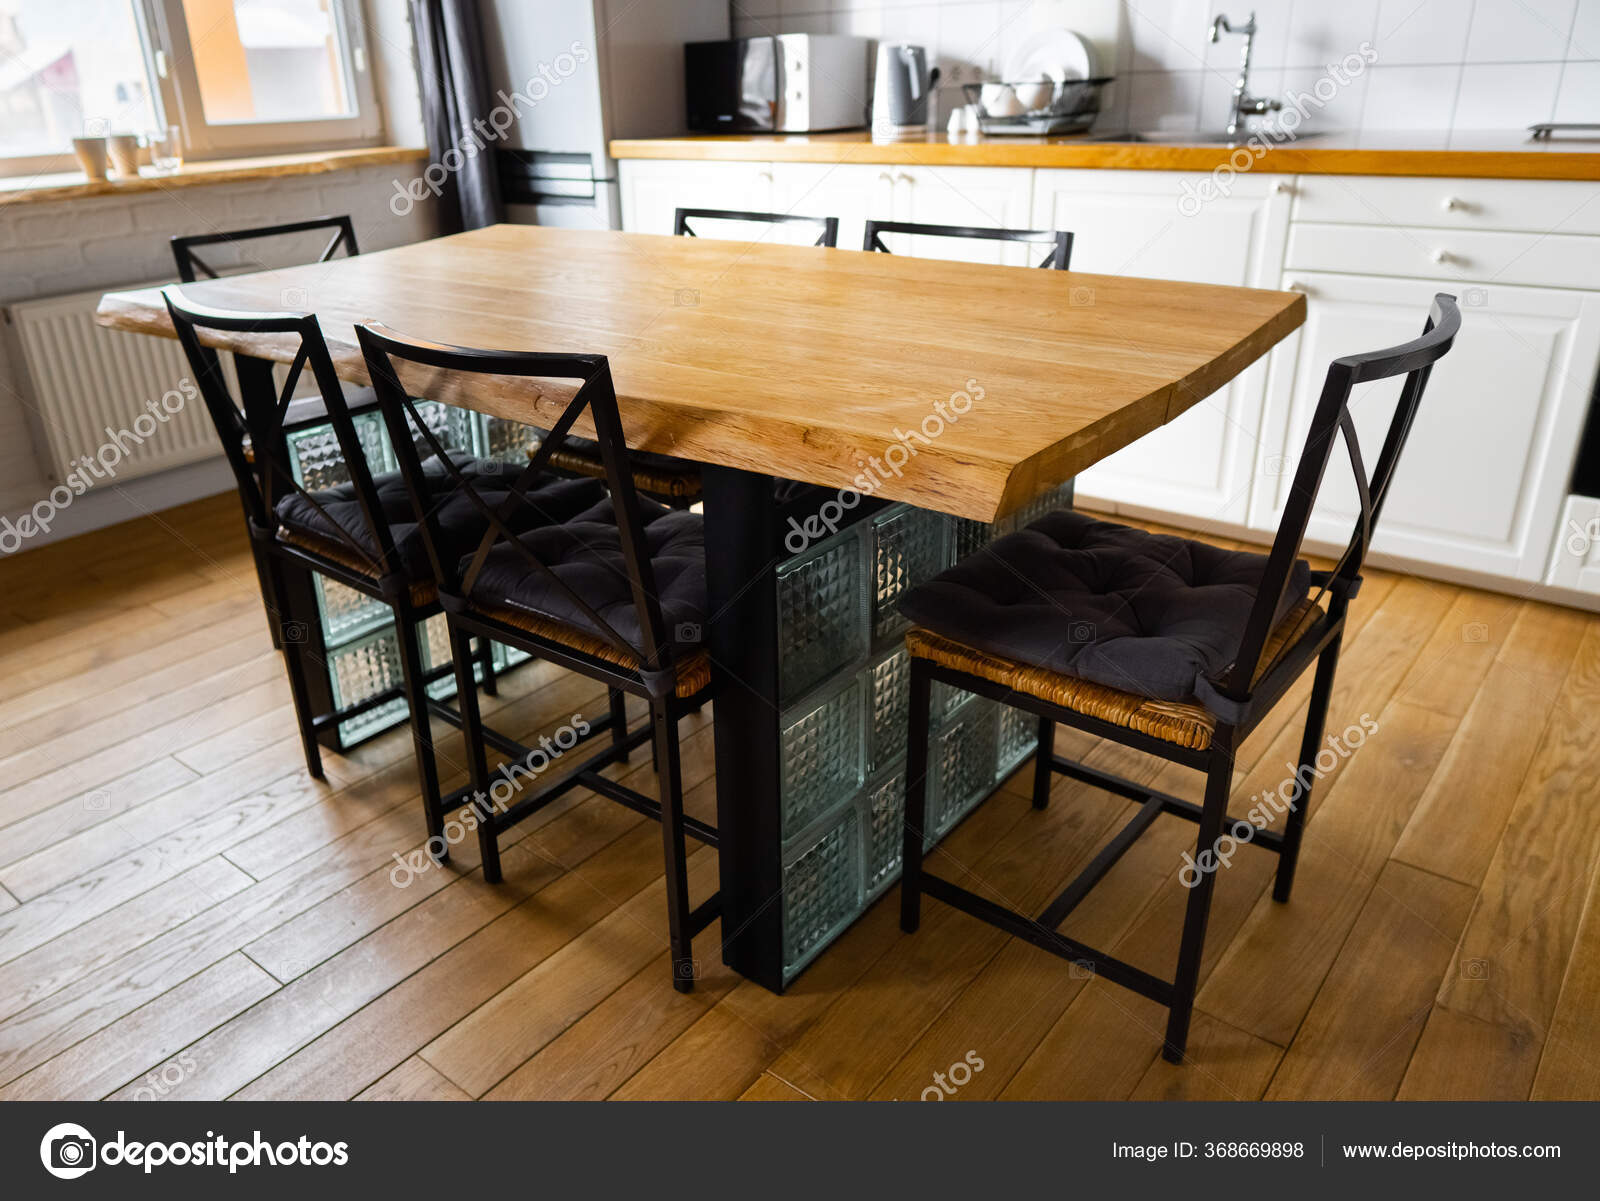 https://st3.depositphotos.com/28293308/36866/i/1600/depositphotos_368669898-stock-photo-big-wooden-dining-table-glass.jpg